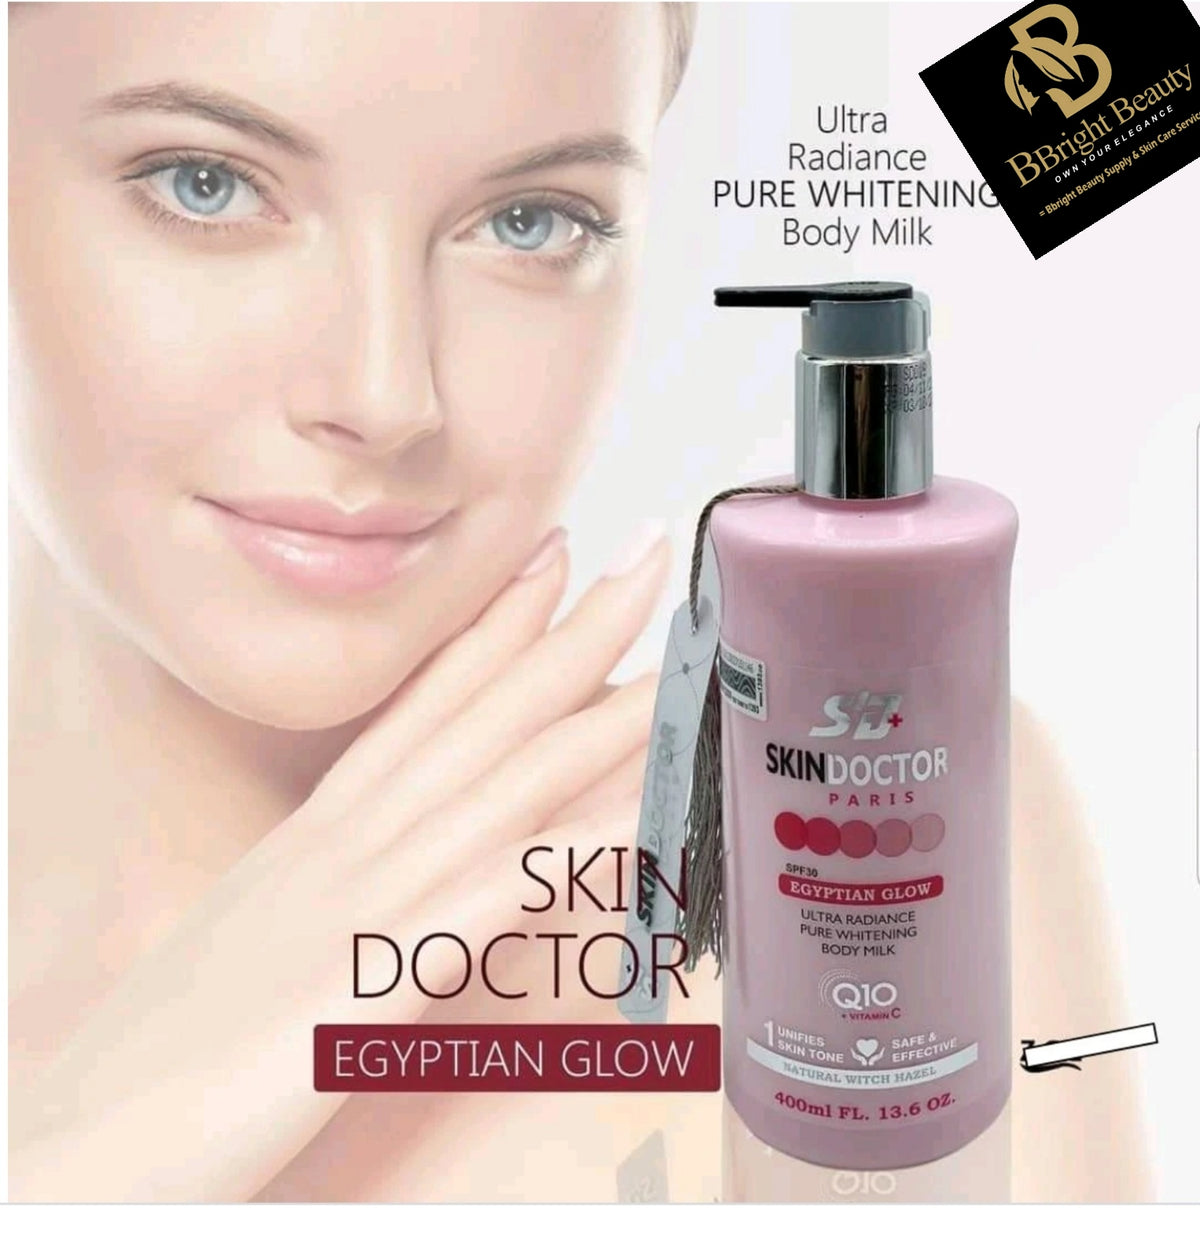 Original Skin Doctor Paris Egyptian Glow Ultra Radiance Pure Whitening Body Milk with SPF 30 400ml